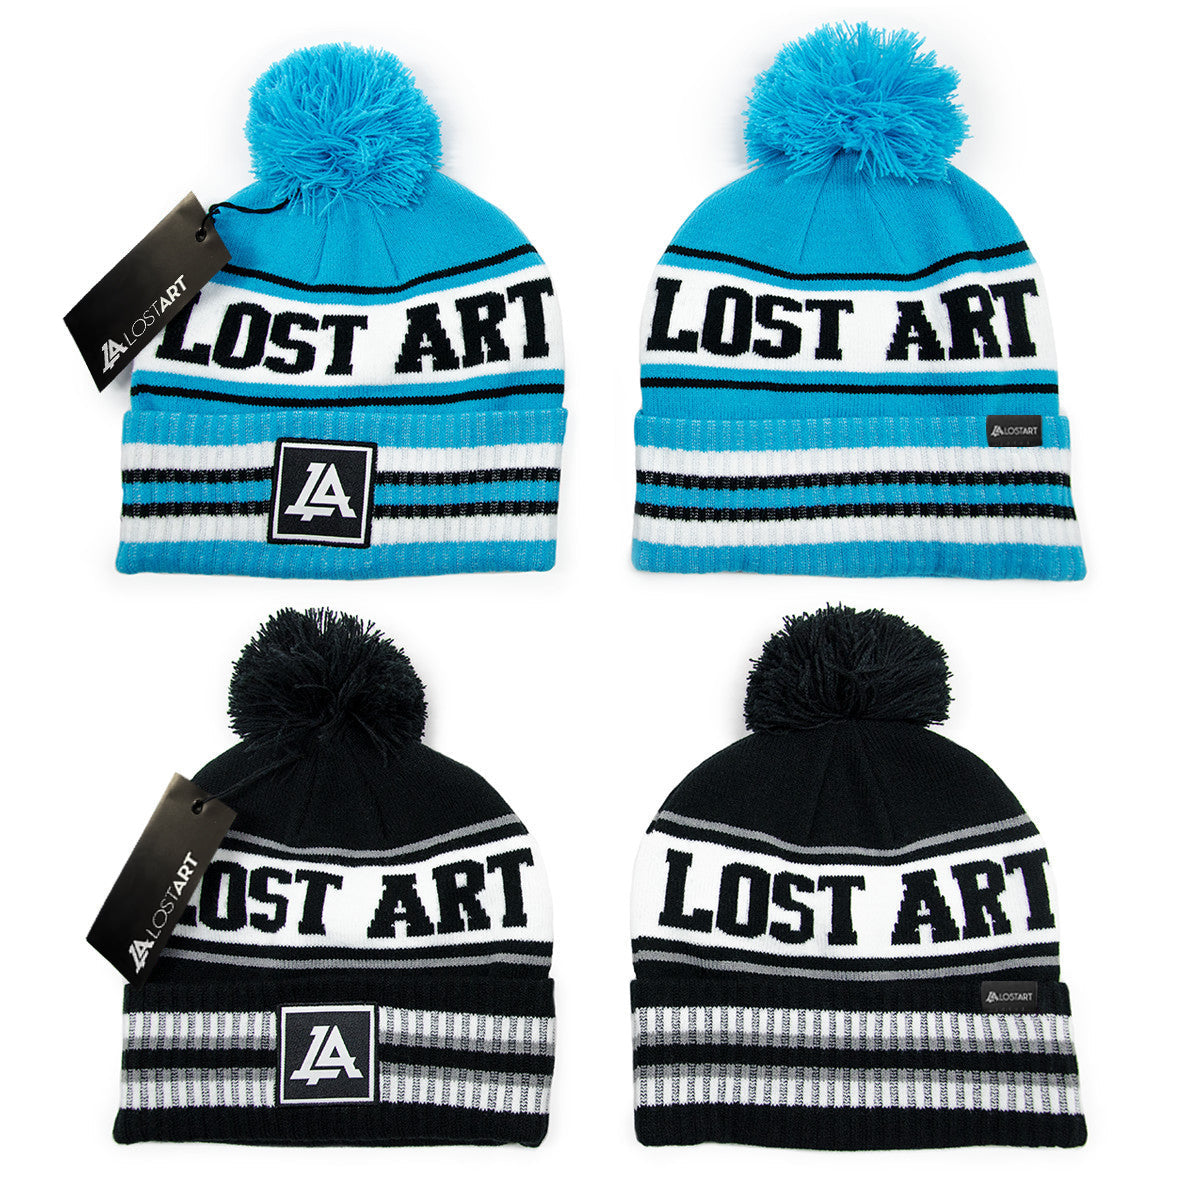 Lost Art Canada - black and blue pompom winter toques